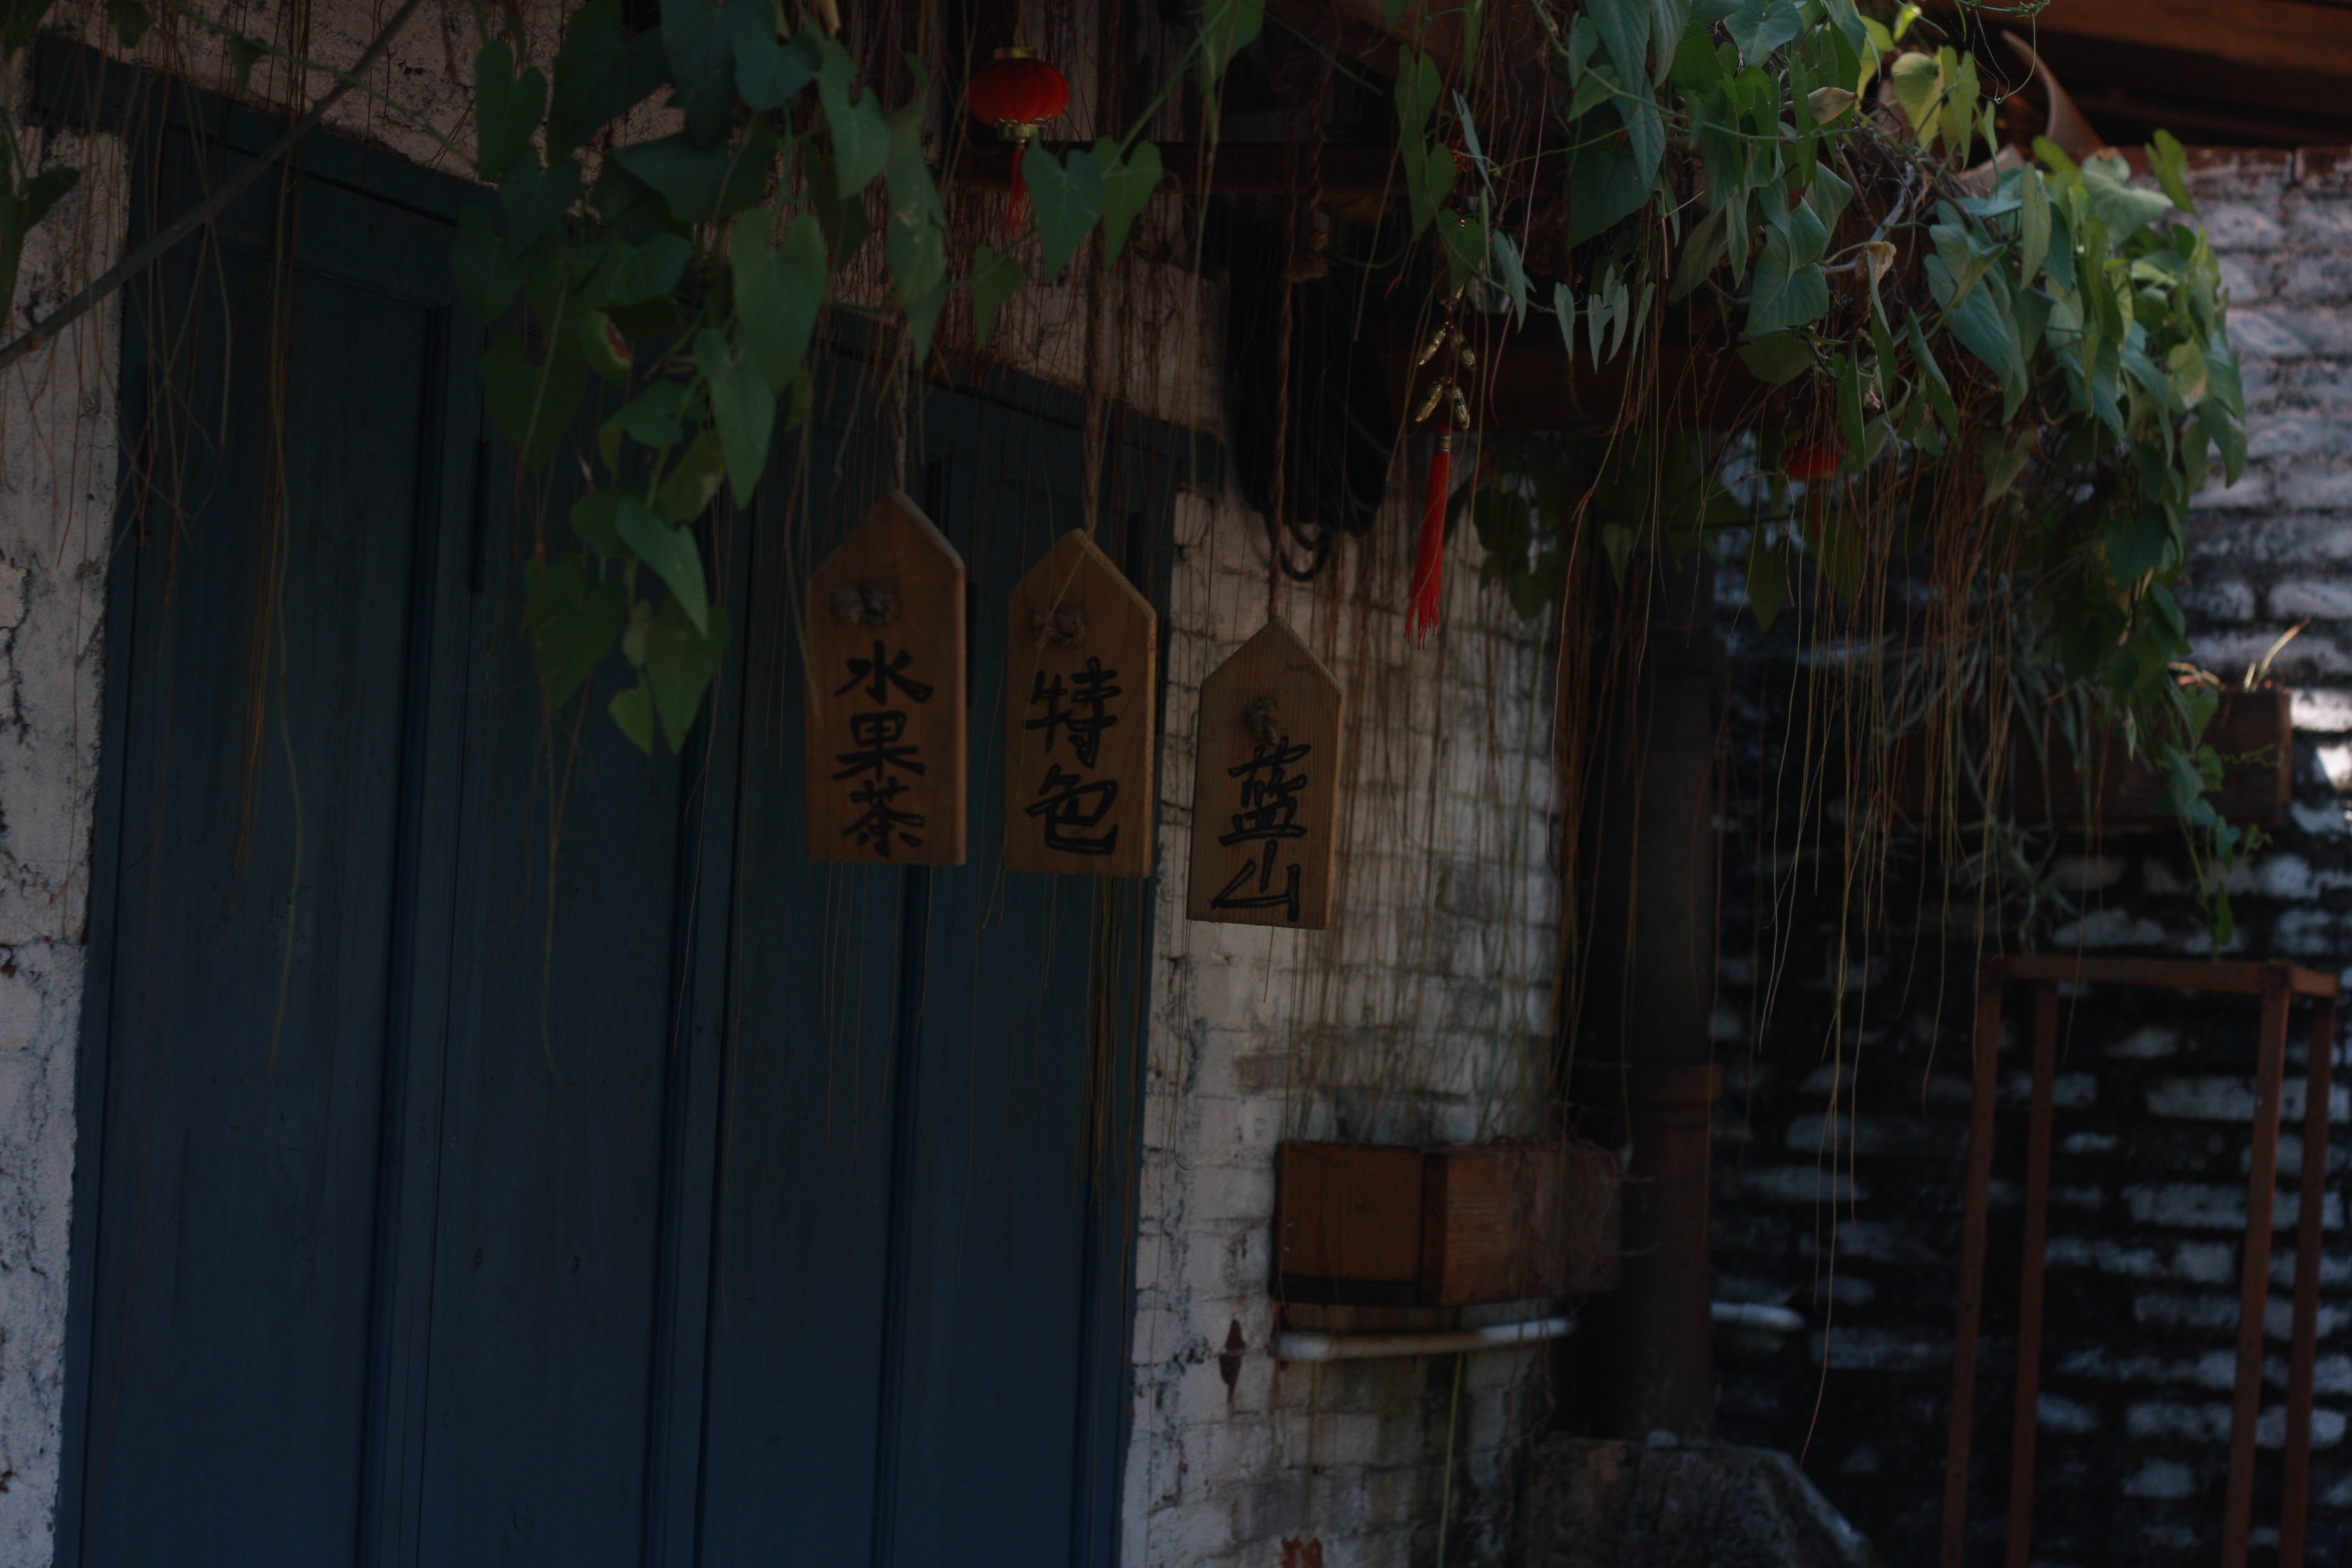 three brown wooden kanji script door decor surrounded with vines